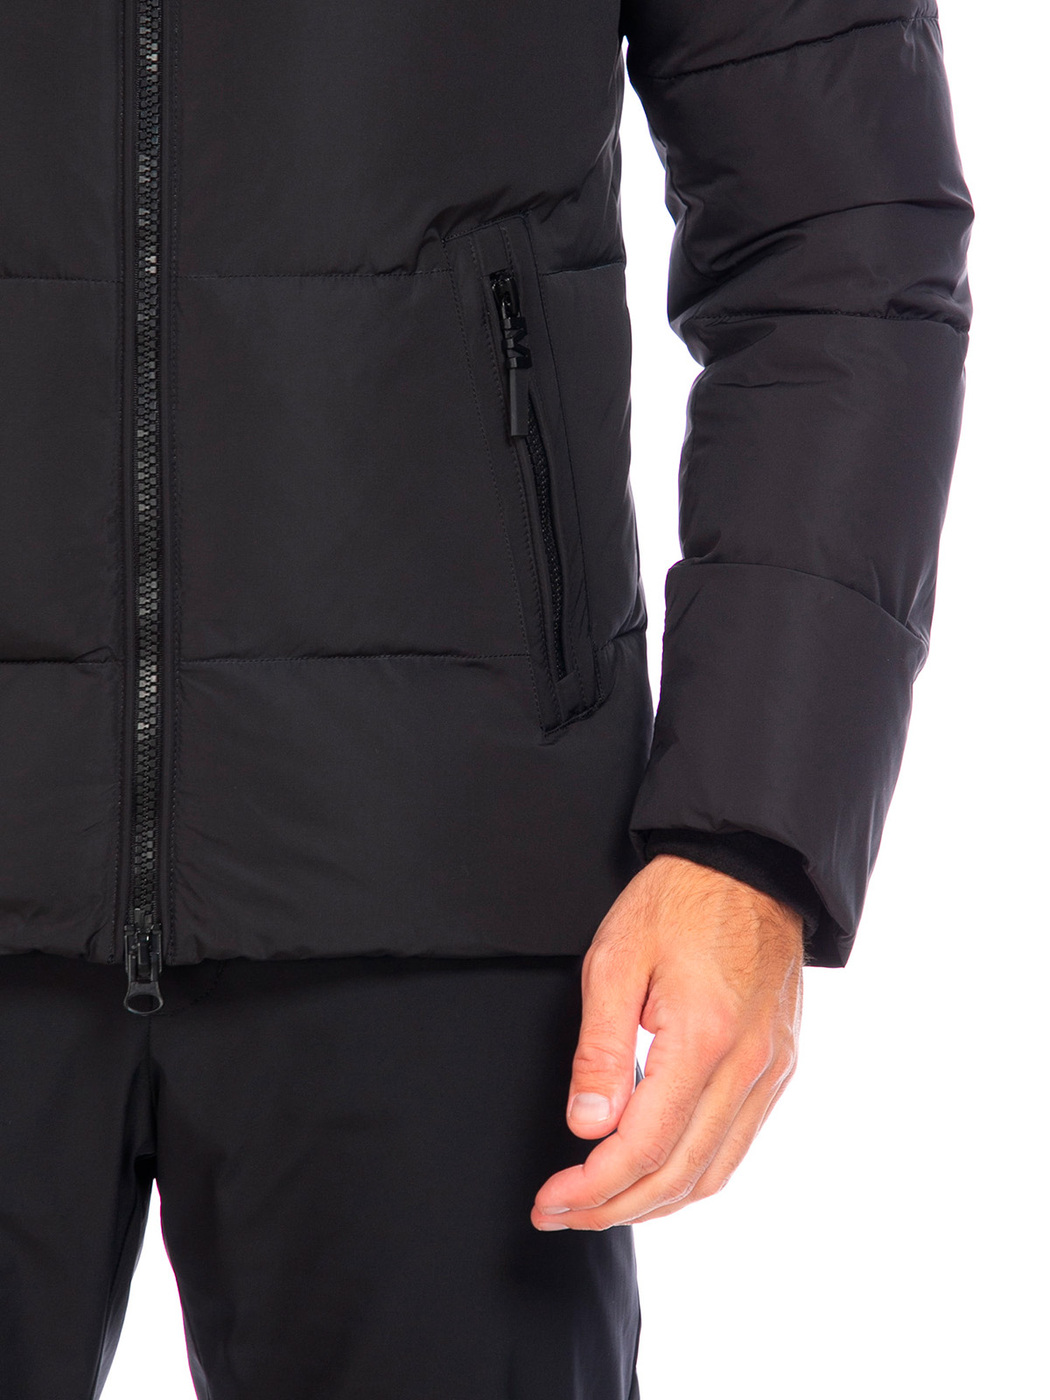 Зимняя куртка мужская LAFOR 767059 черная 3XL